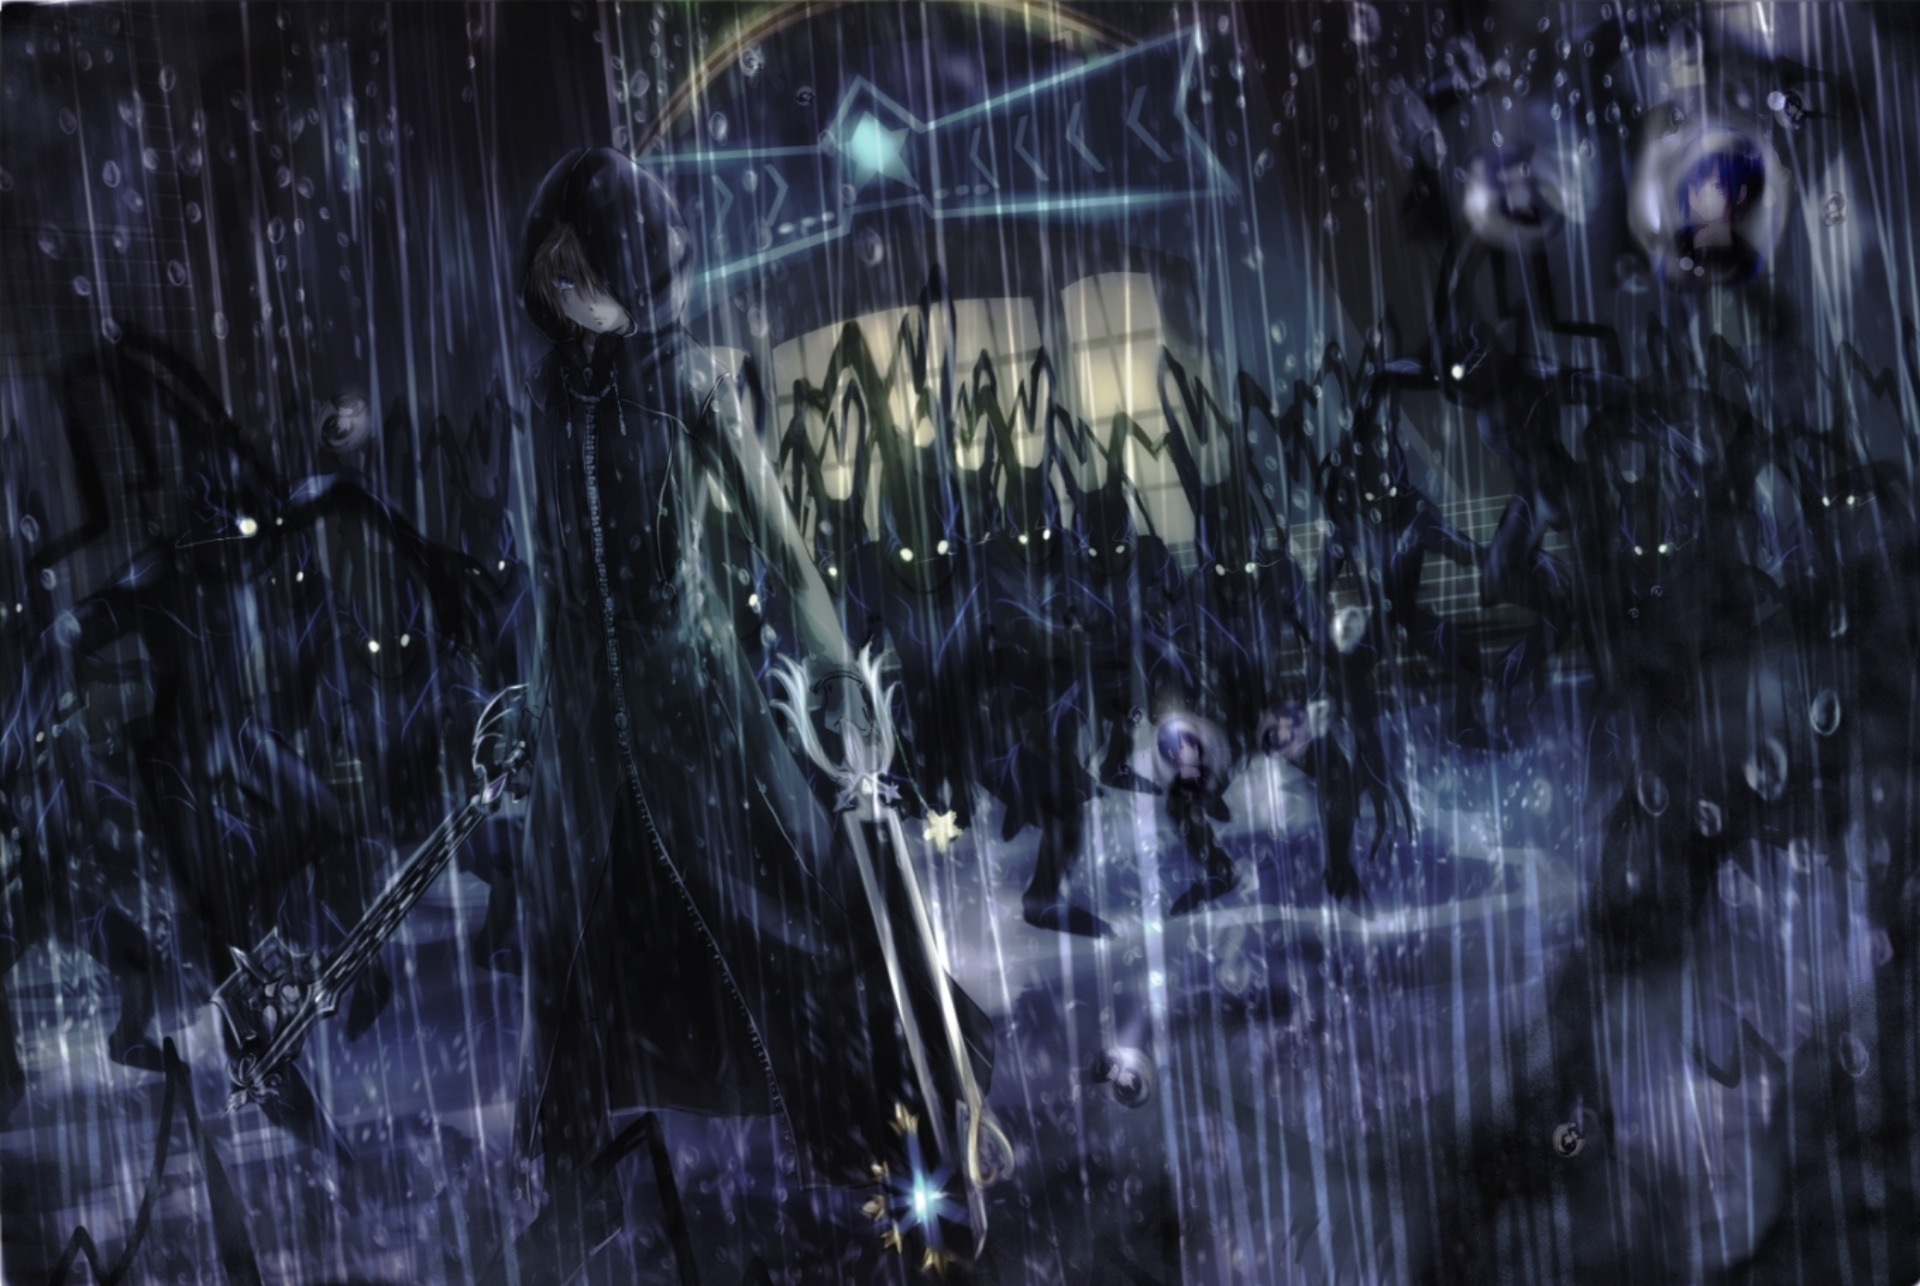 Video Game Kingdom Hearts II HD Wallpaper | Background Image